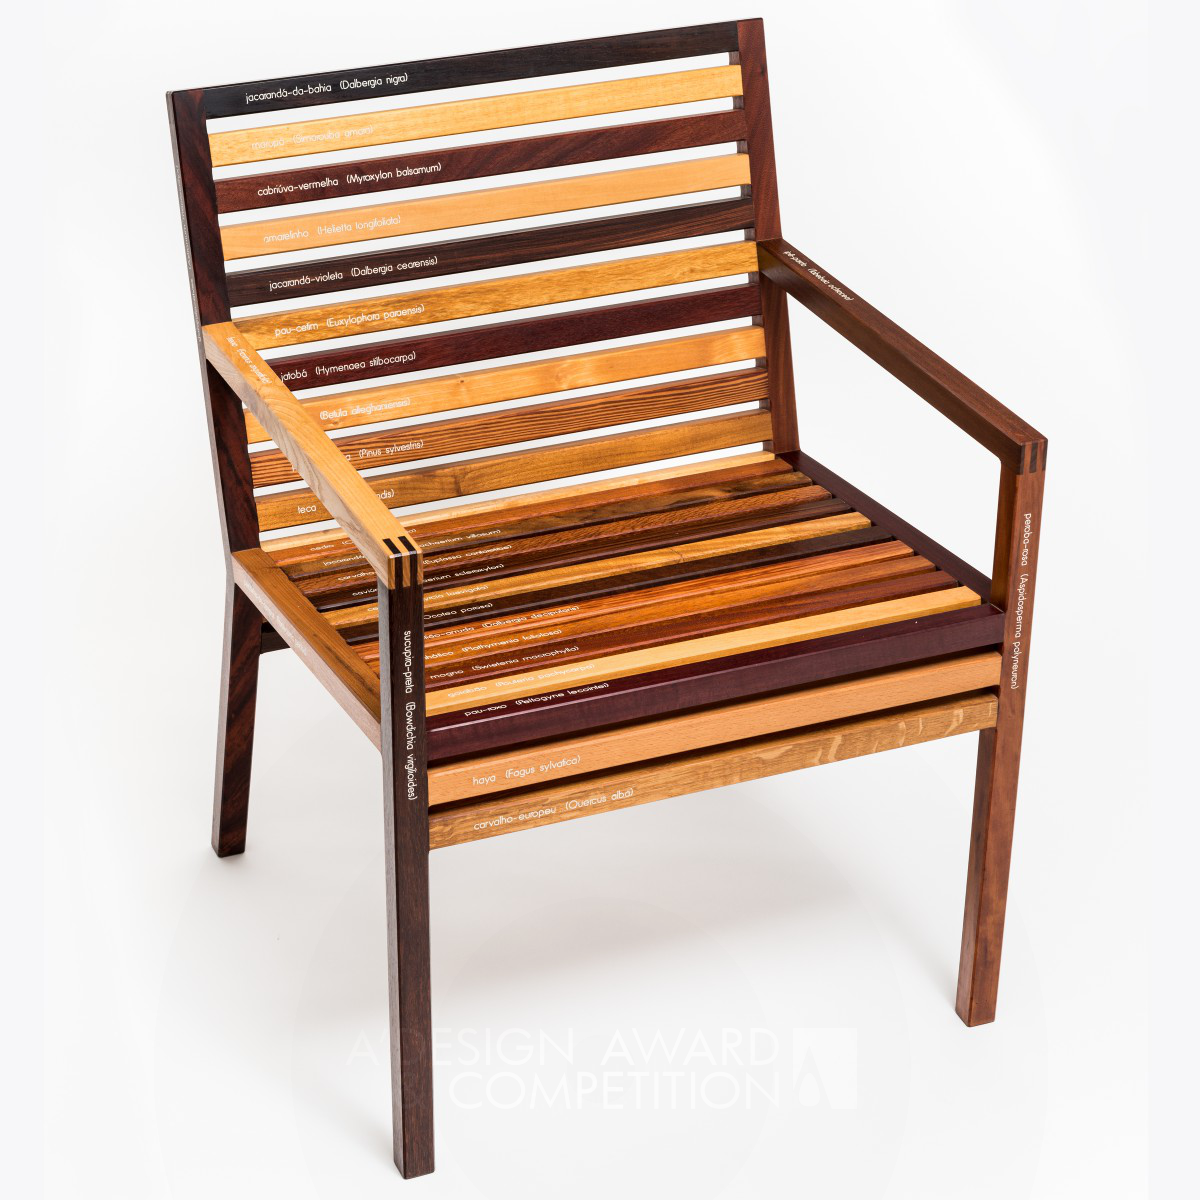 Cadeira: A Chair Made of 34 Wooden Species